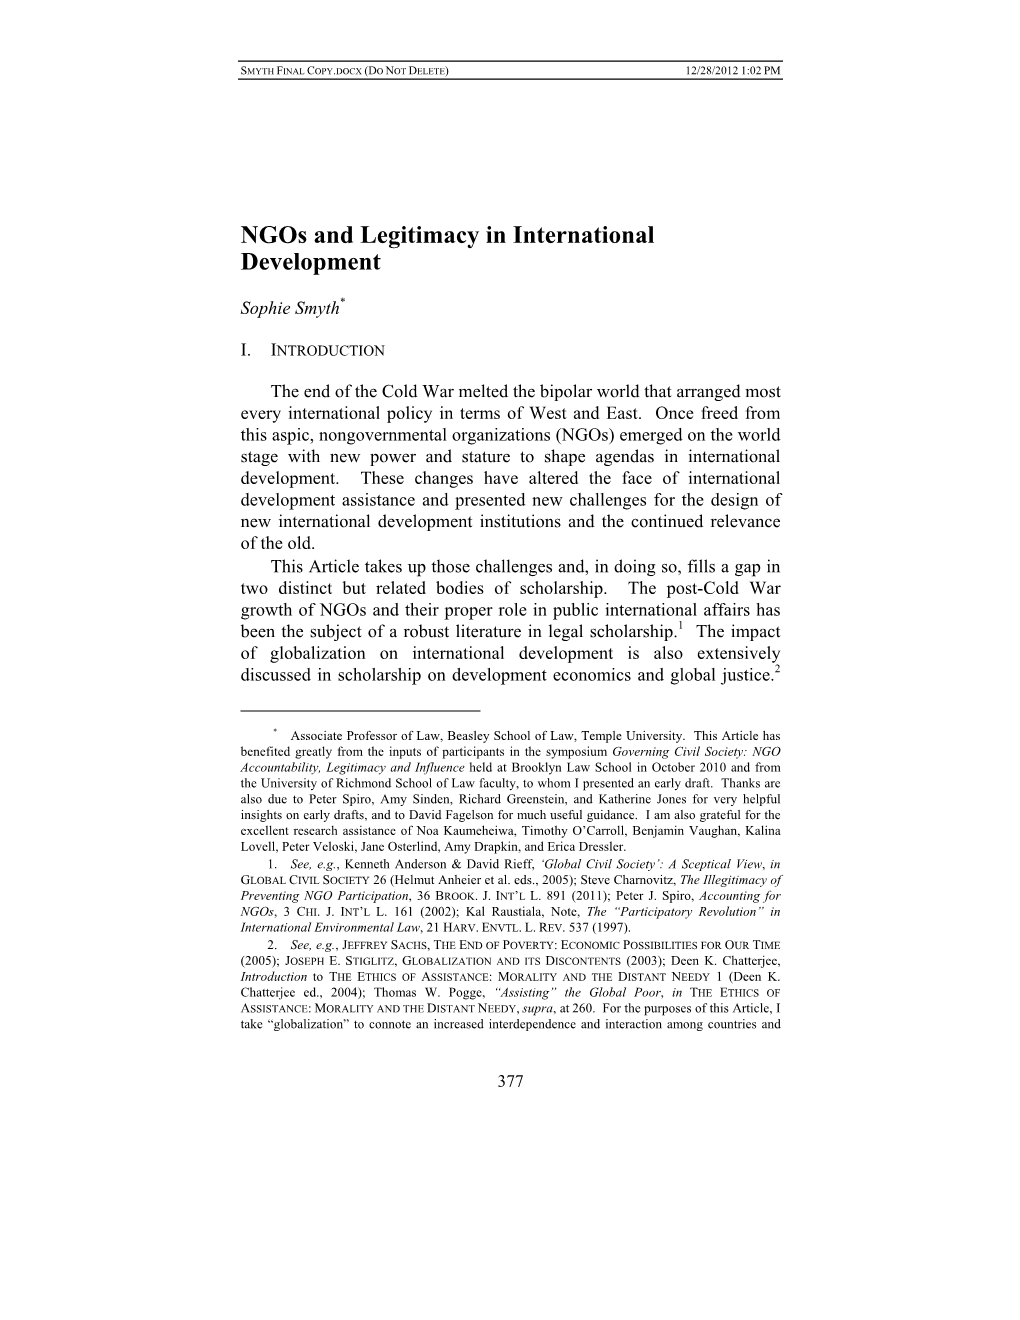 Ngos and Legitimacy in International Development